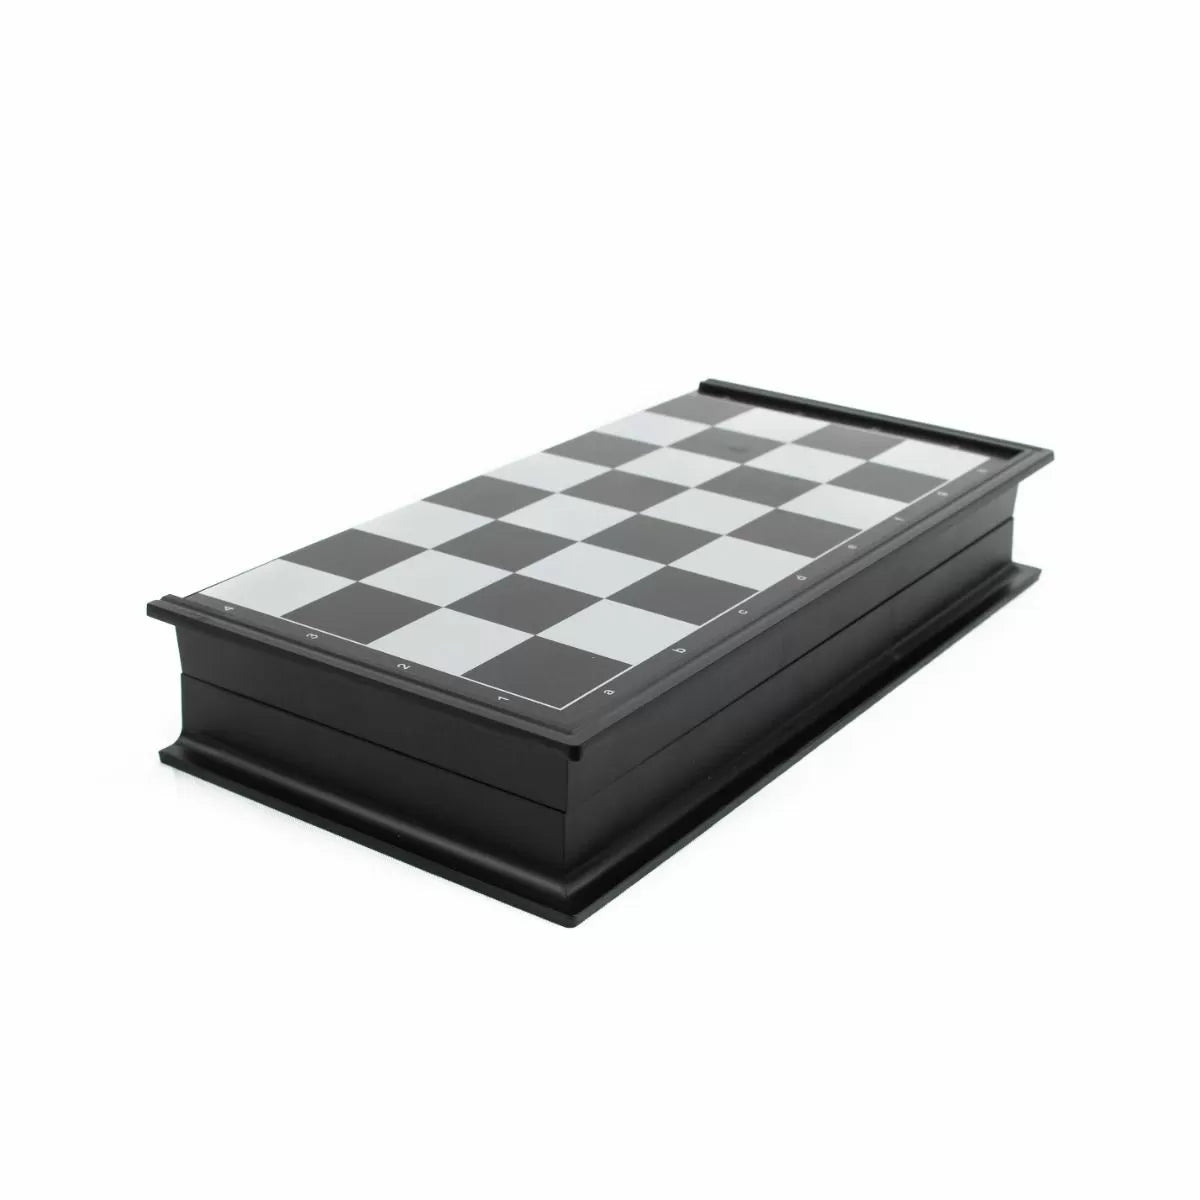 LPG Plastic Magnetic Chess Set - 20 cm Foldable Board